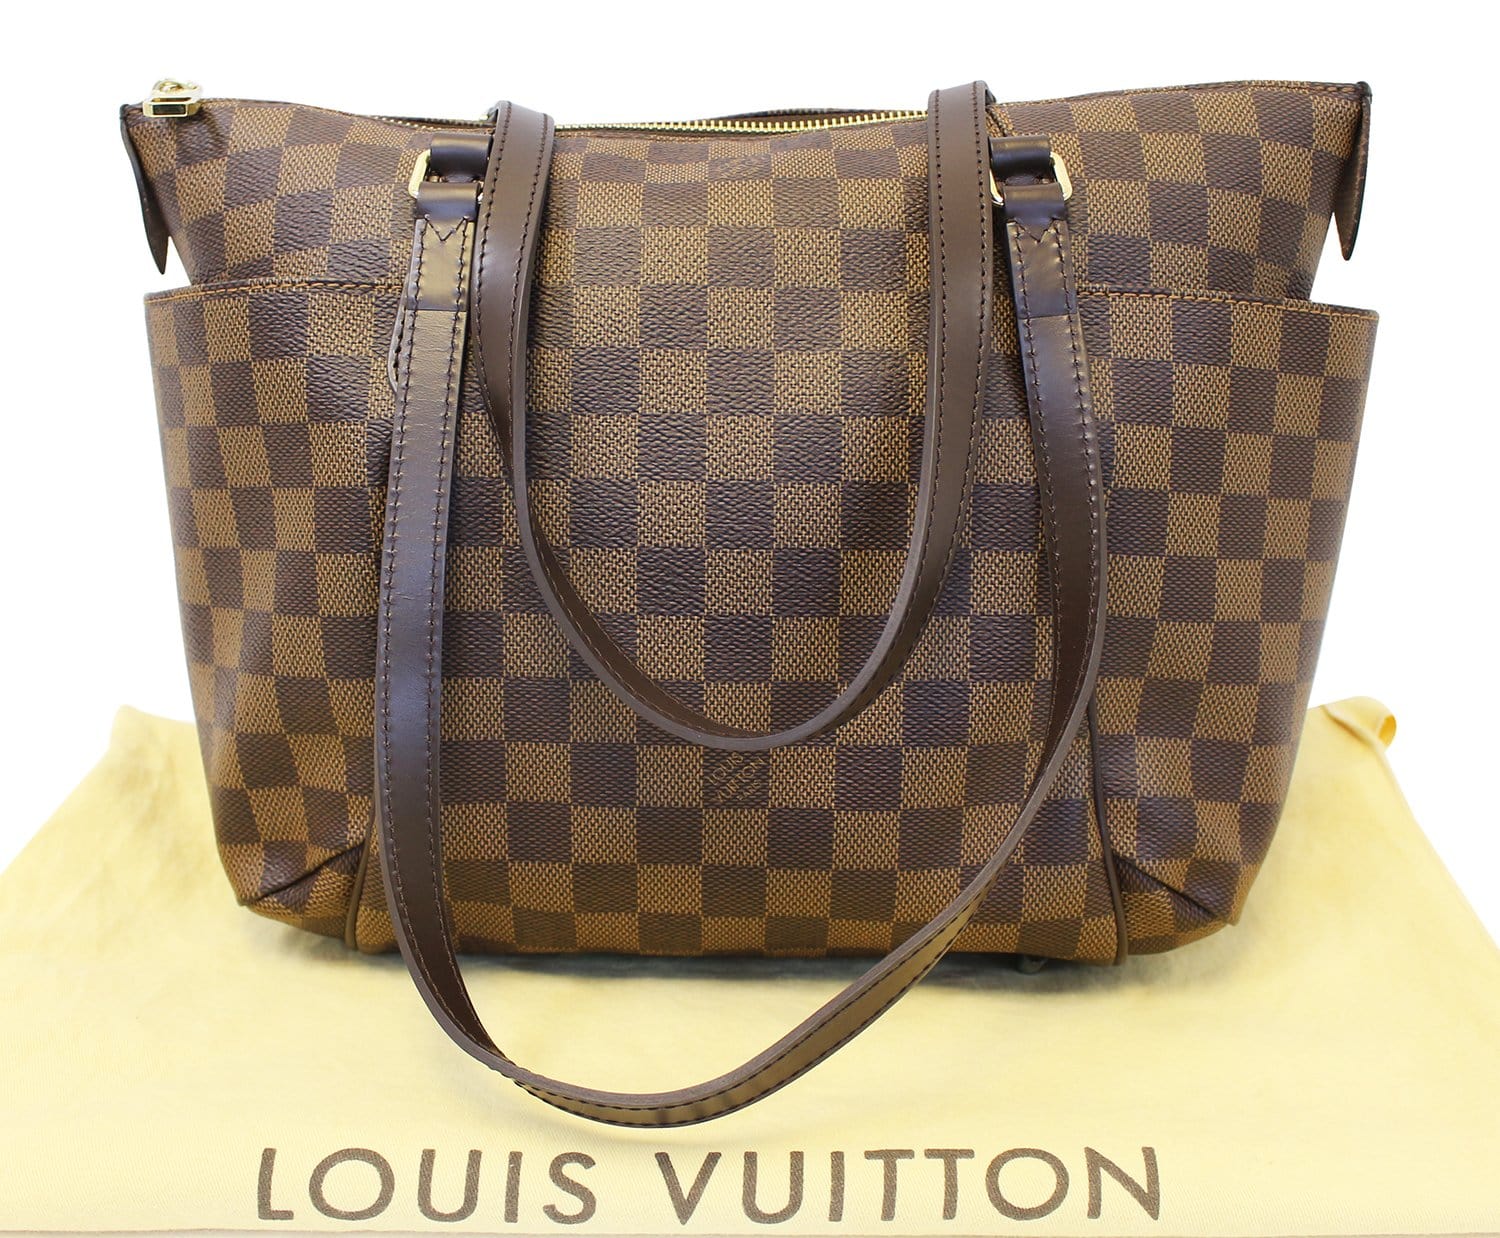 LOUIS VUITTON Damier Azur Totally Pm Shoulder Handbag